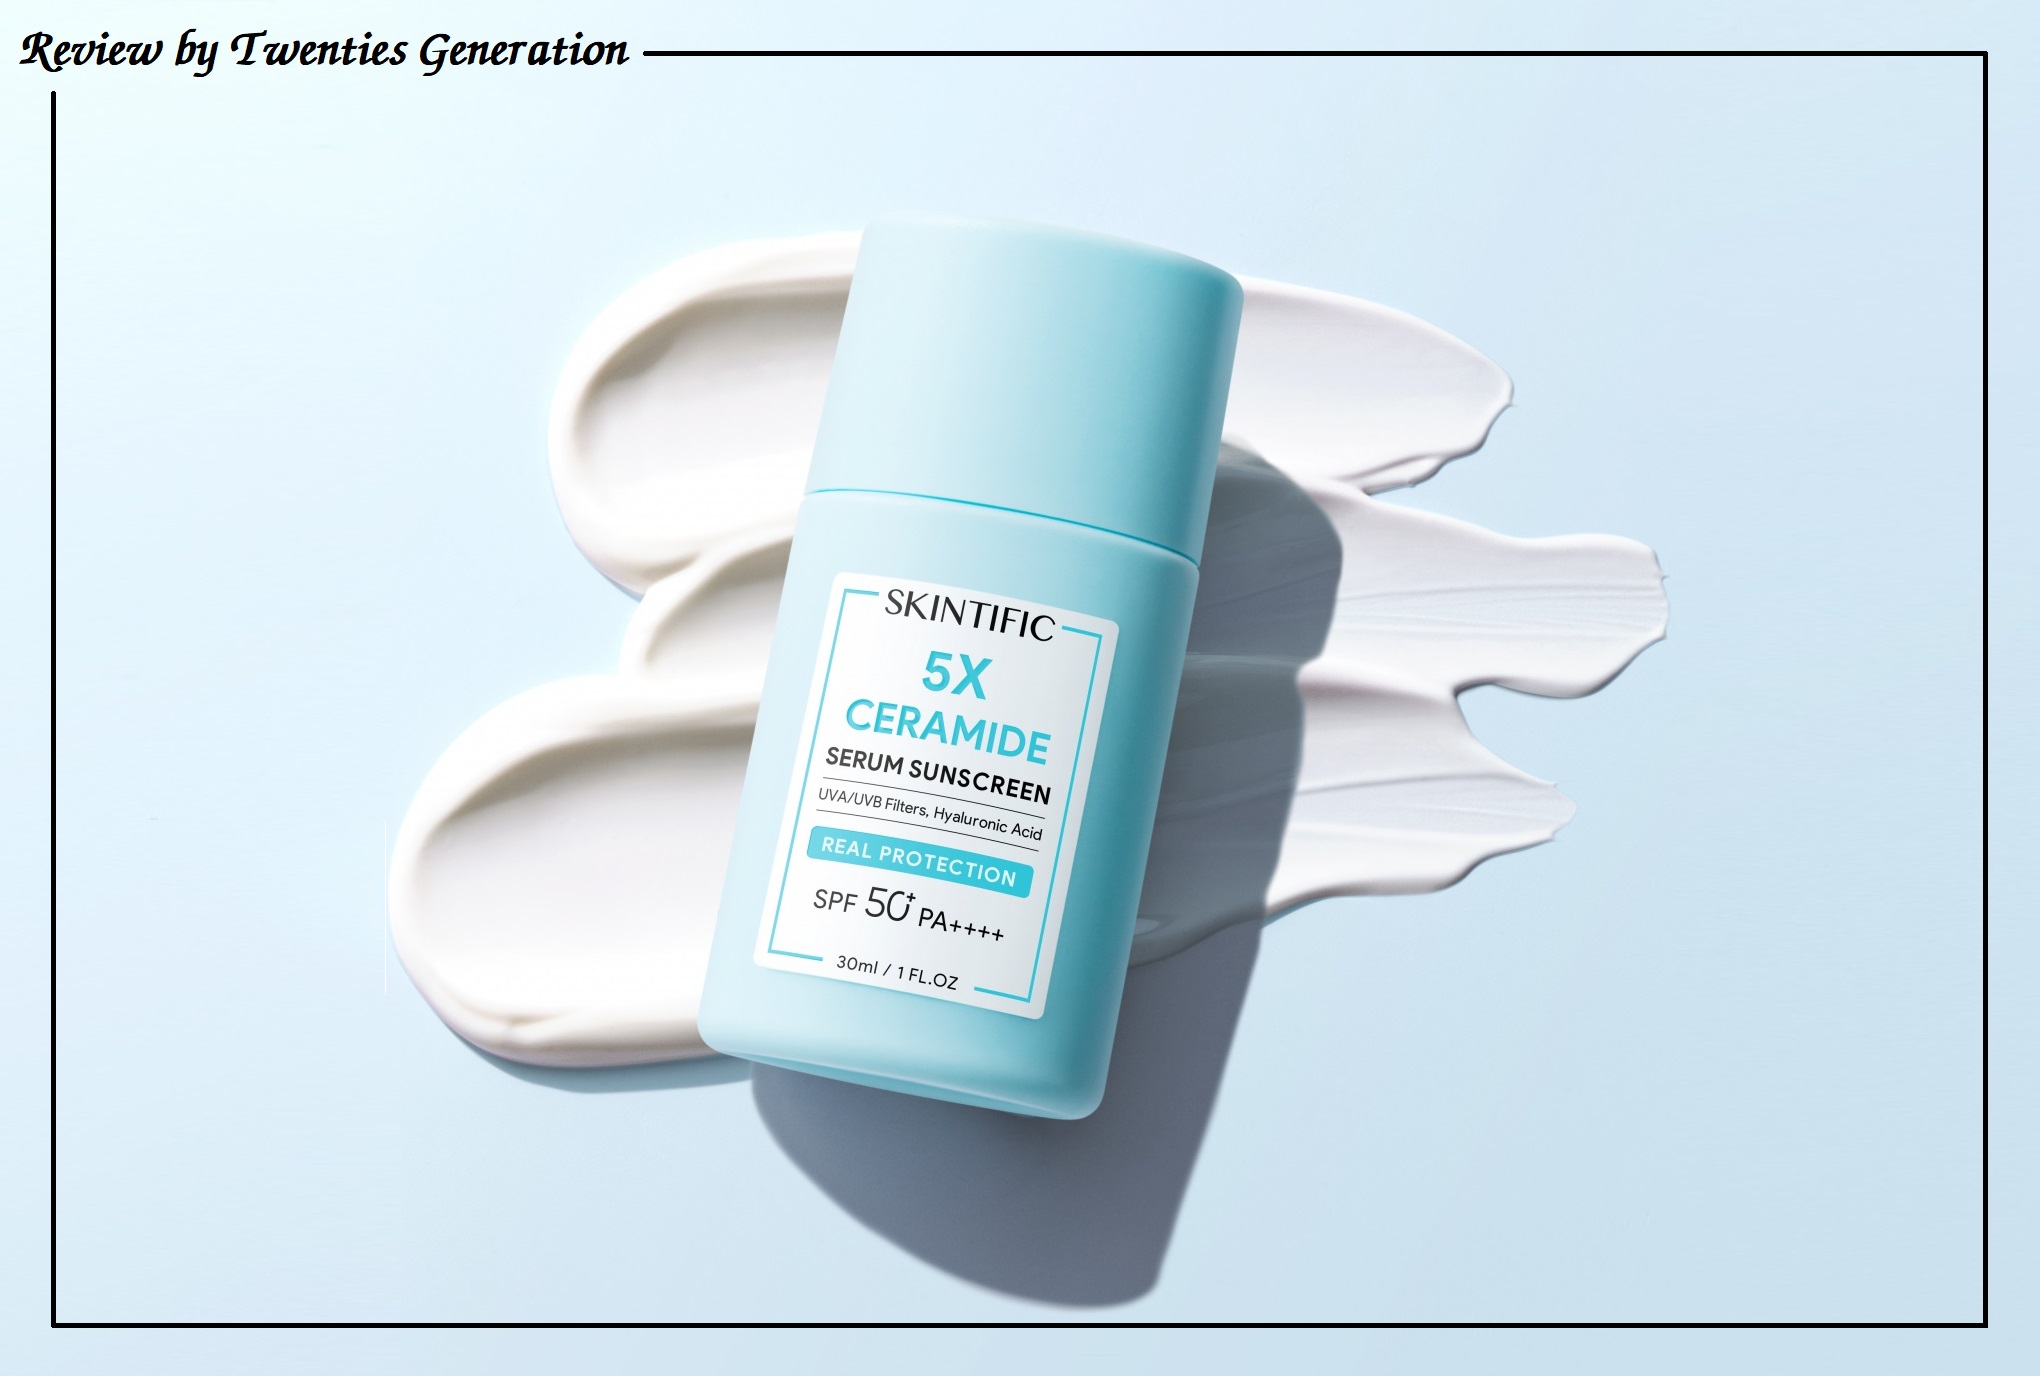 Skintific 5x Ceramide Serum Sunscreen Ingredients